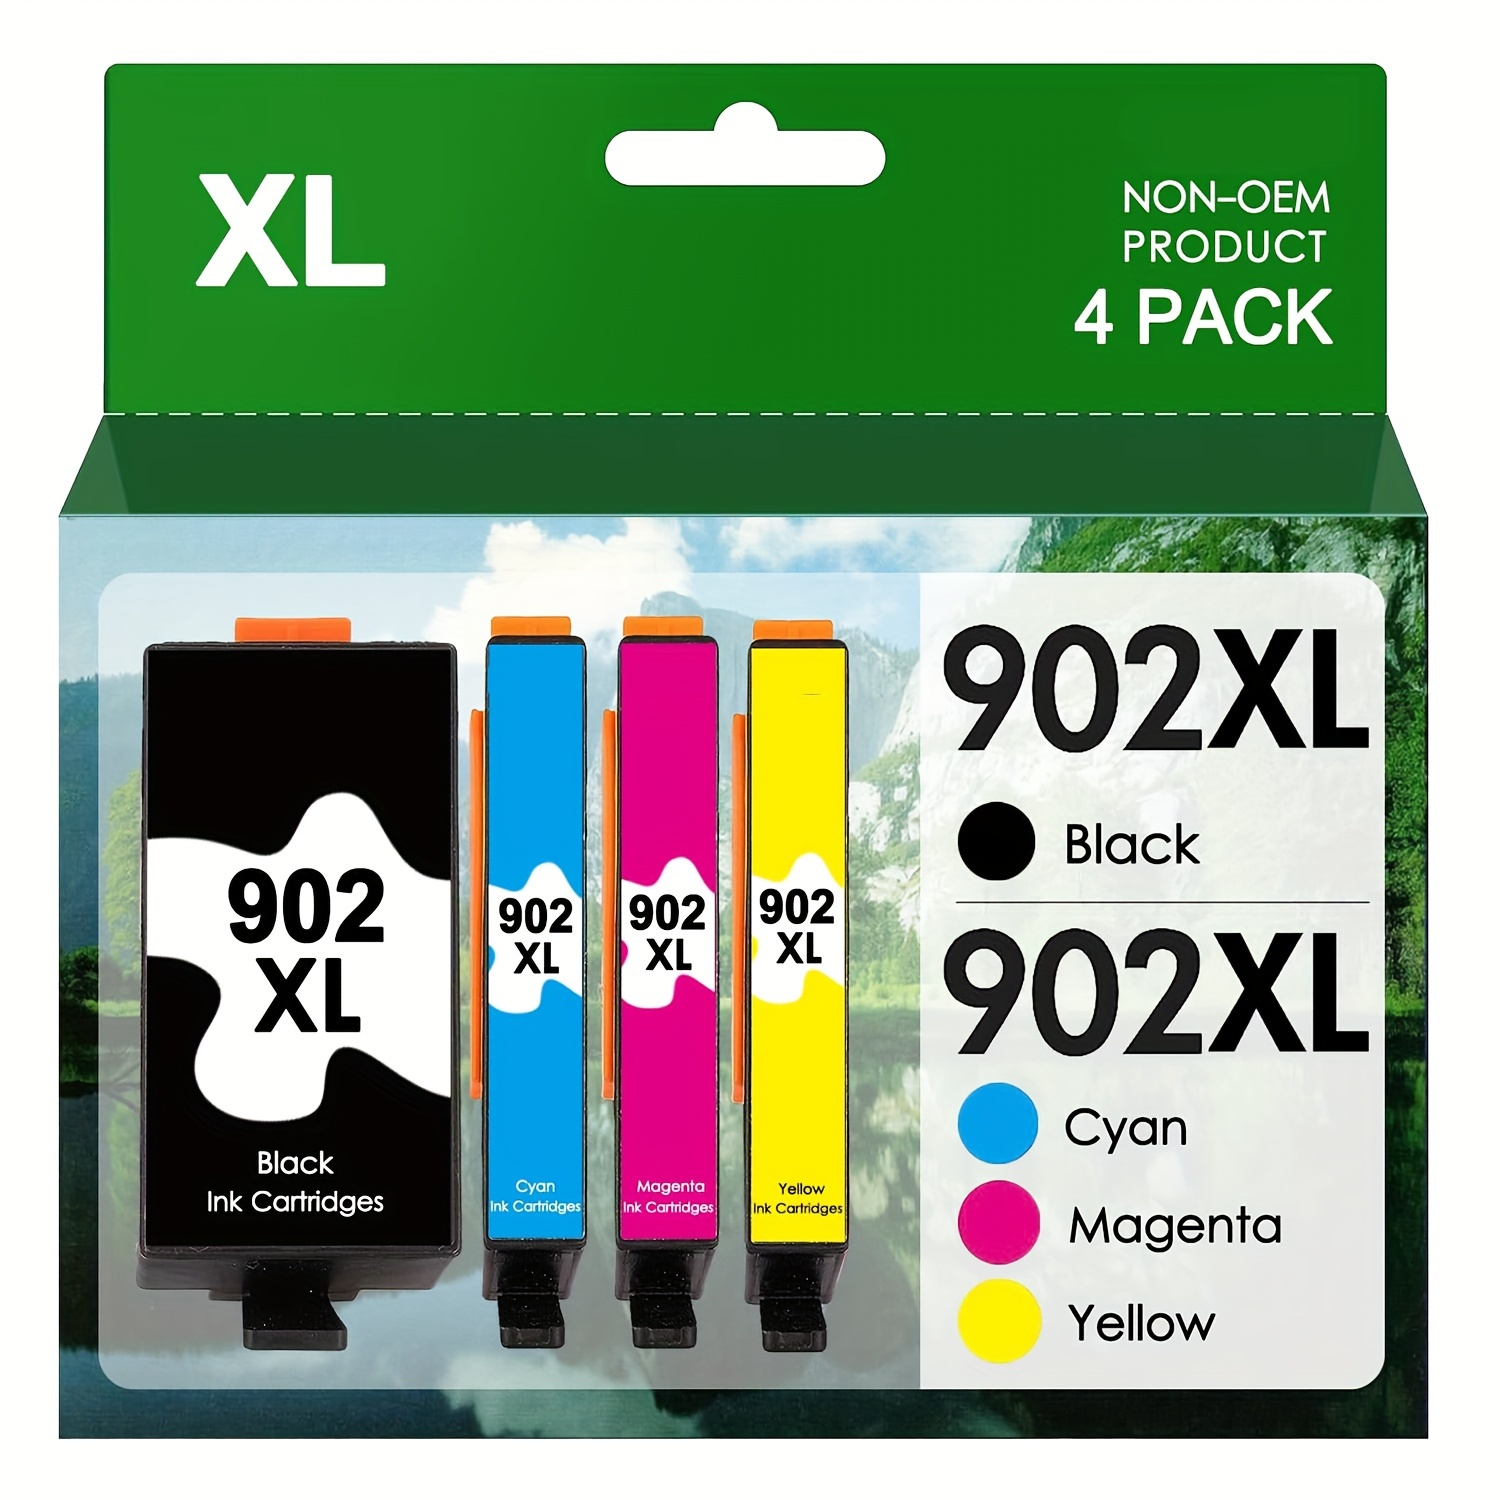 HP 953 XL (4 pack) Ink Cartridge Replacement - Buy Printer